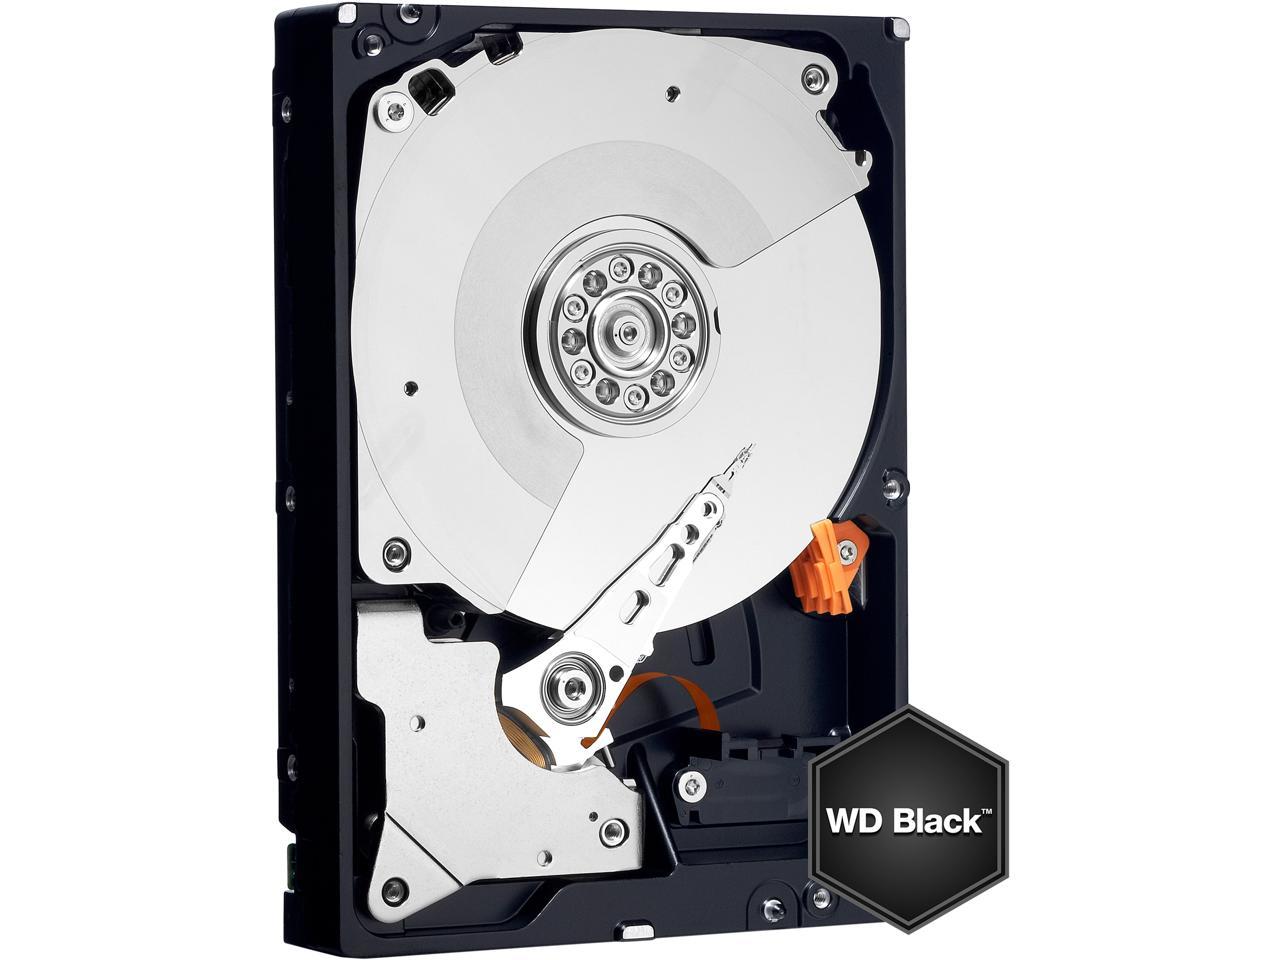 WD Black 3TB Performance Desktop Hard Disk Drive - 7200 RPM SATA 6 